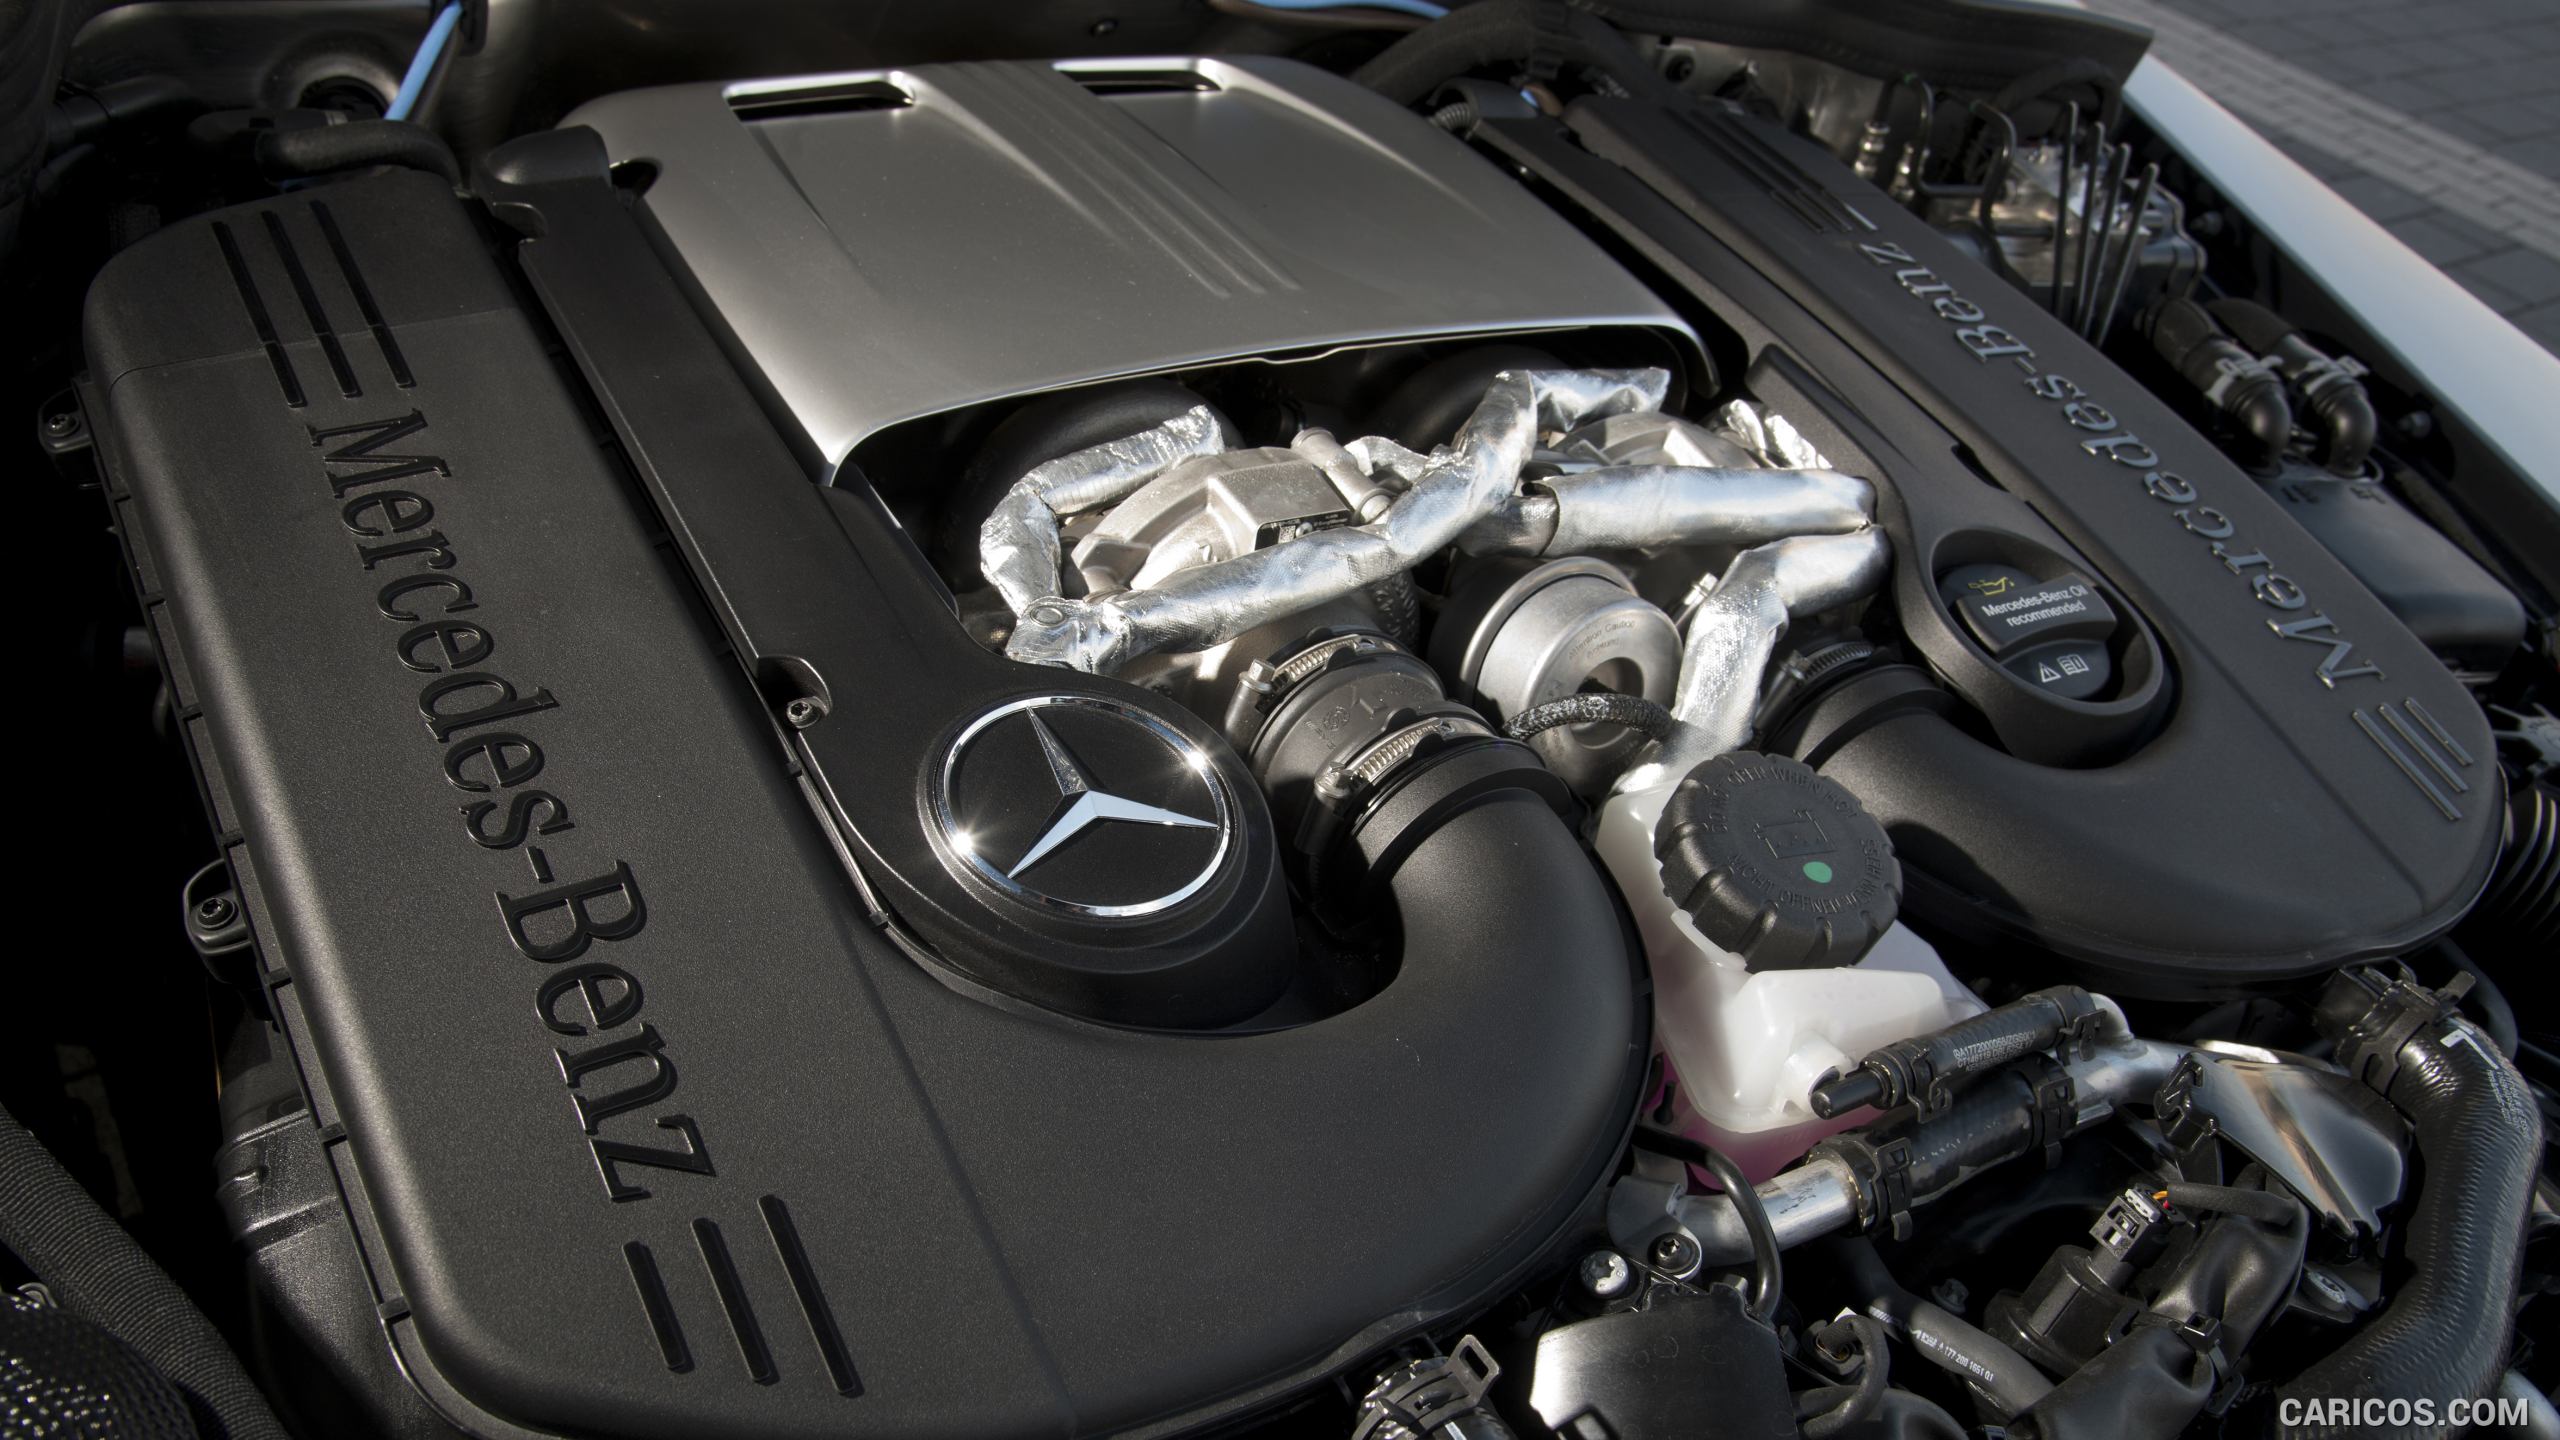 Мотор гелика. Mercedes Benz m113. Mercedes-Benz m113 engine. Двигатель Мерседес w463 g 500. Двигатель Мерседес g500.